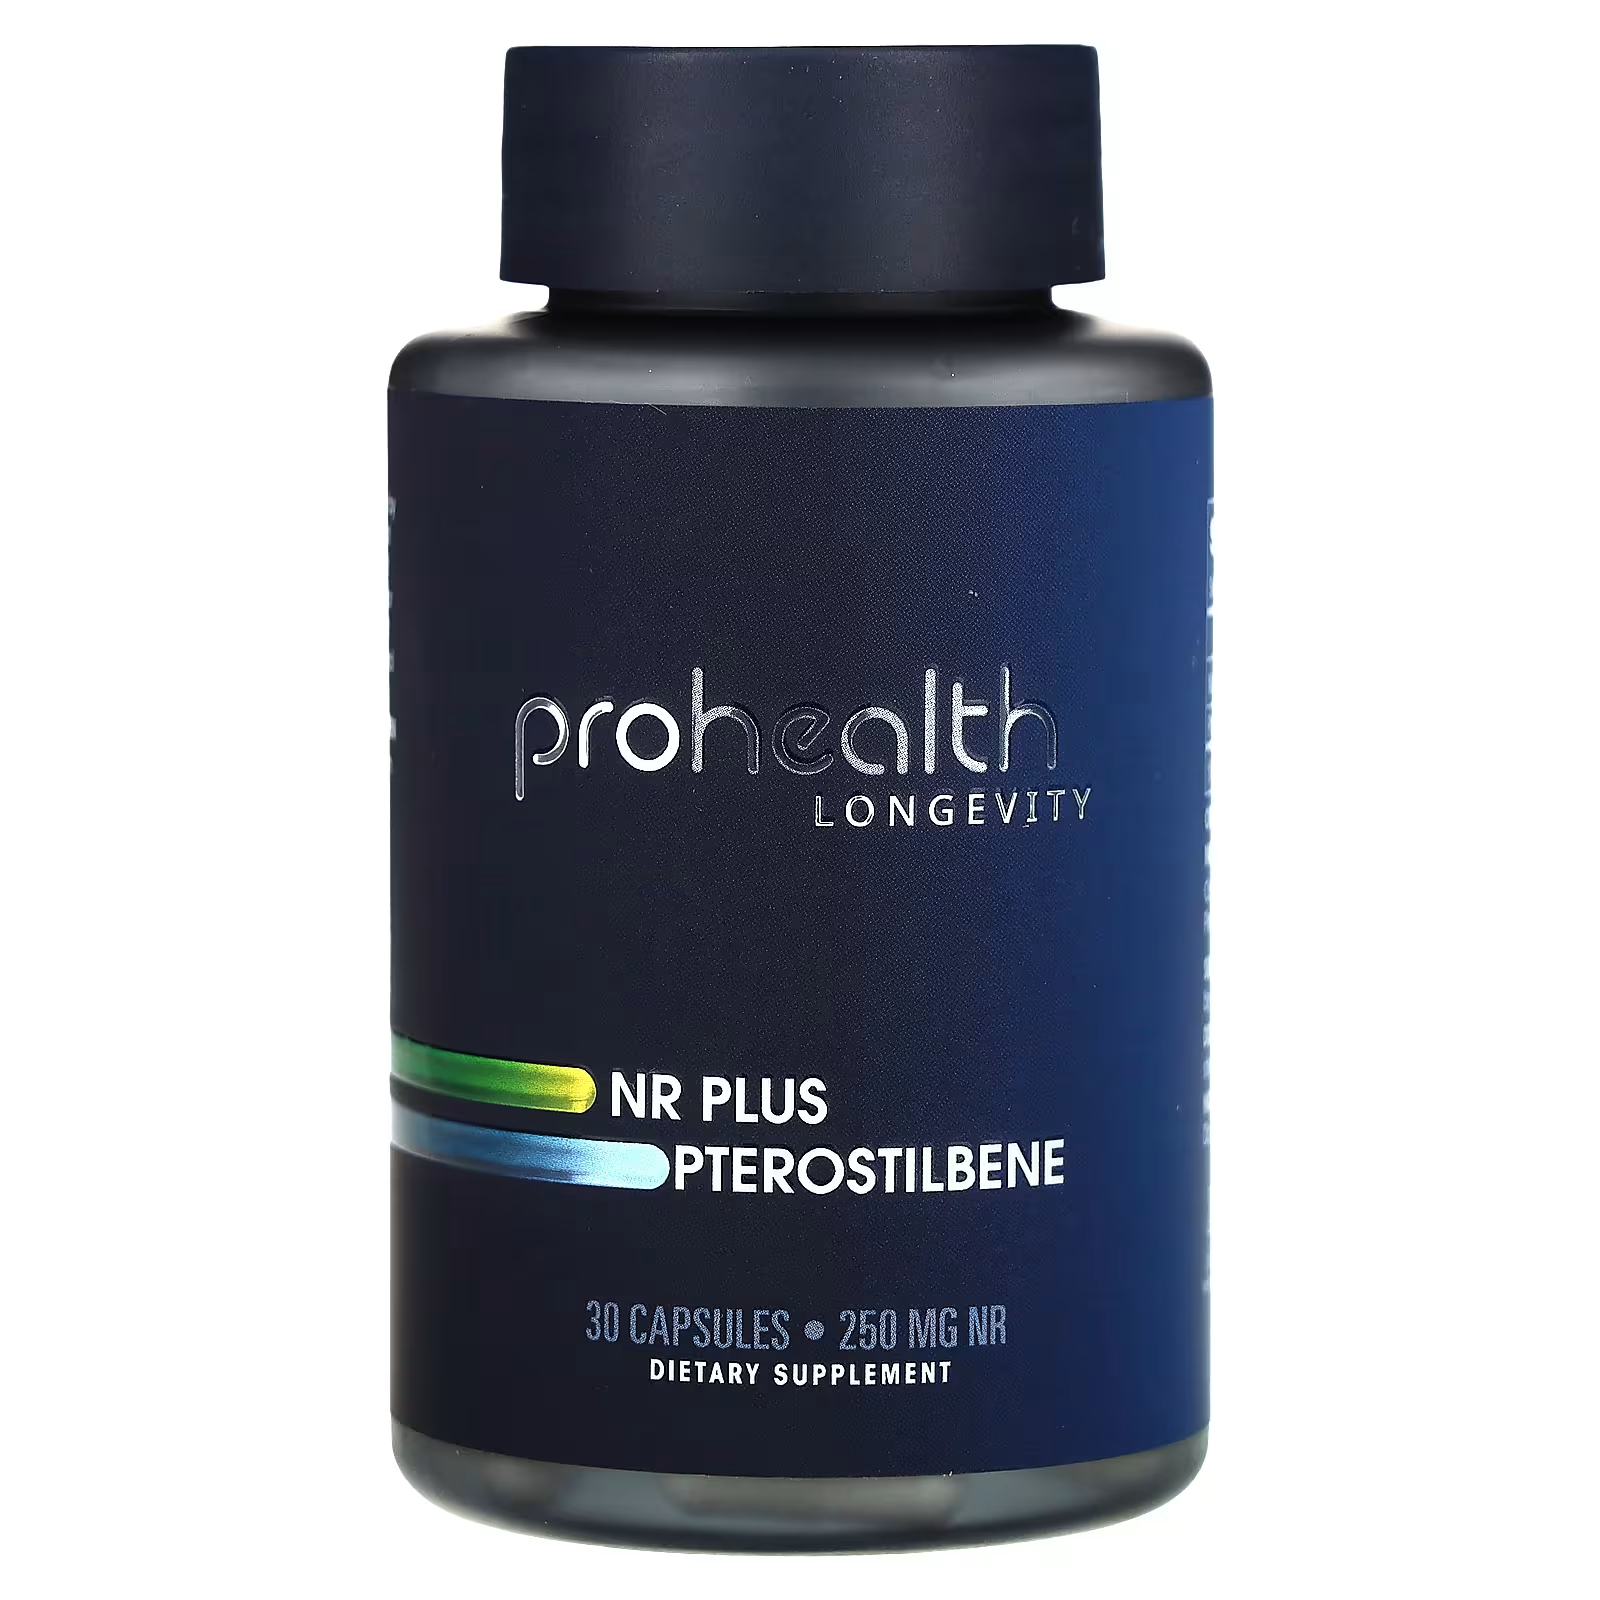 Птеростильбен ProHealth Longevity NR Plus 250 мг, 30 капсул prohealth longevity птеростильбен про 250 250 мг 60 капсул